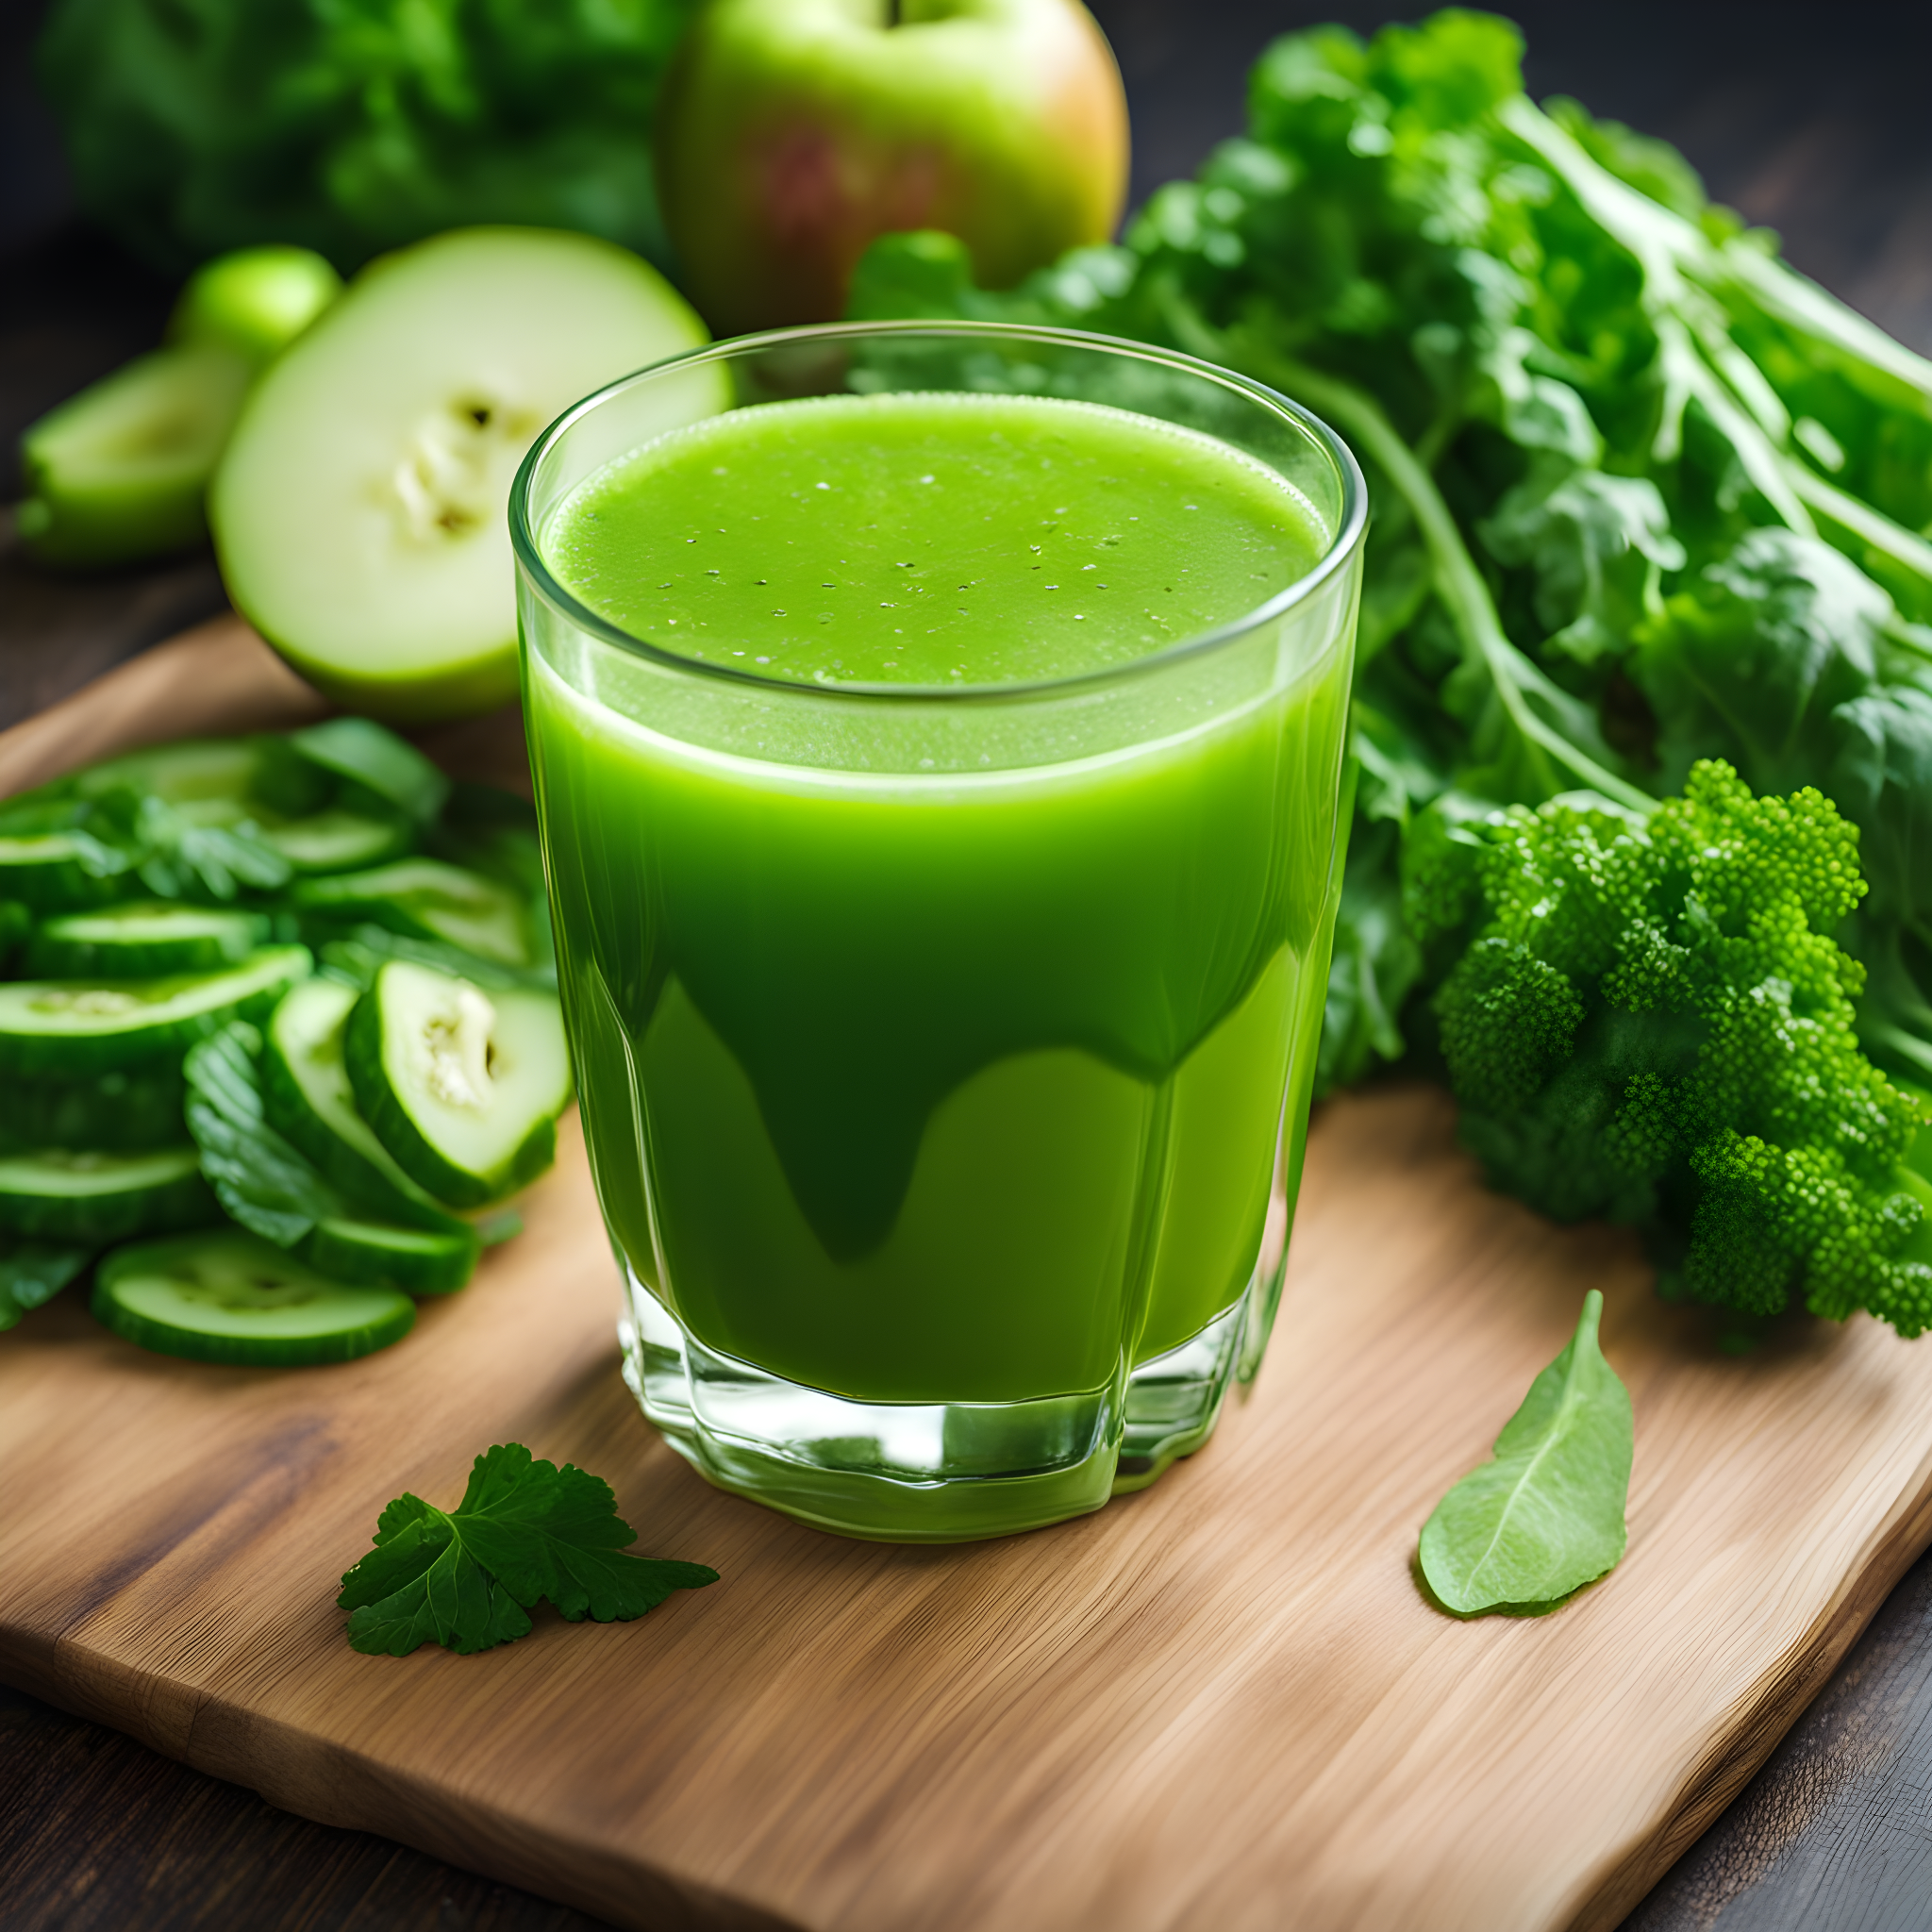 Freshly prepared green juice in a glass